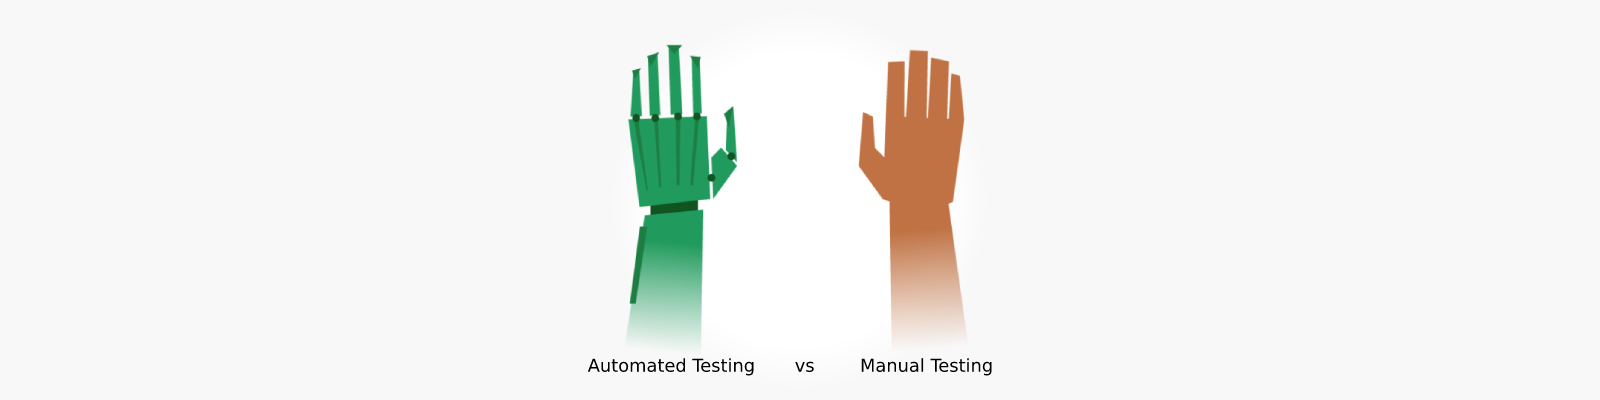 Manual vs Automated Testing